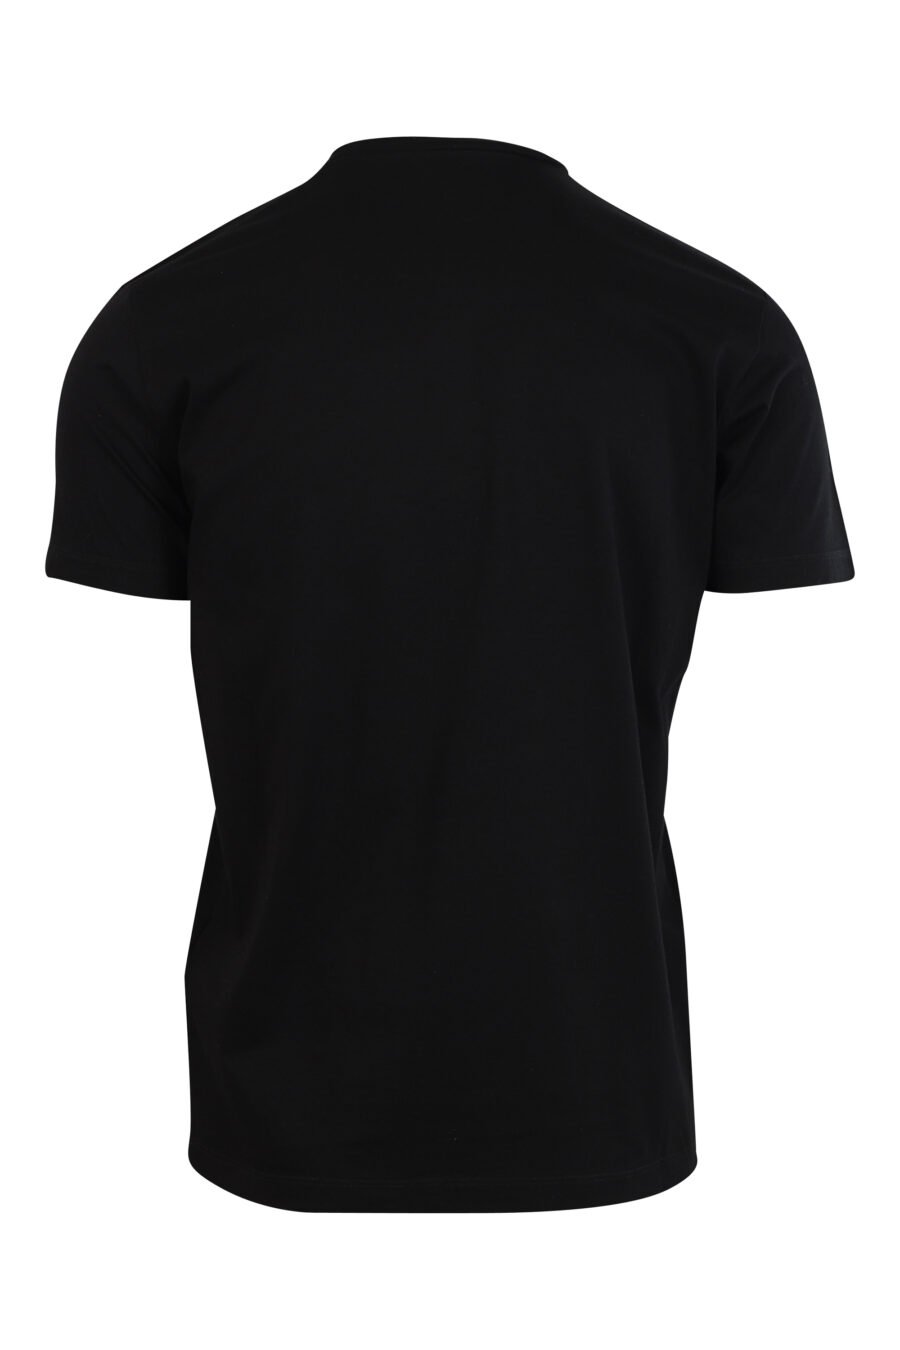 Black T-shirt with maxilogo "icon heart pixel" - 8052134980910 2